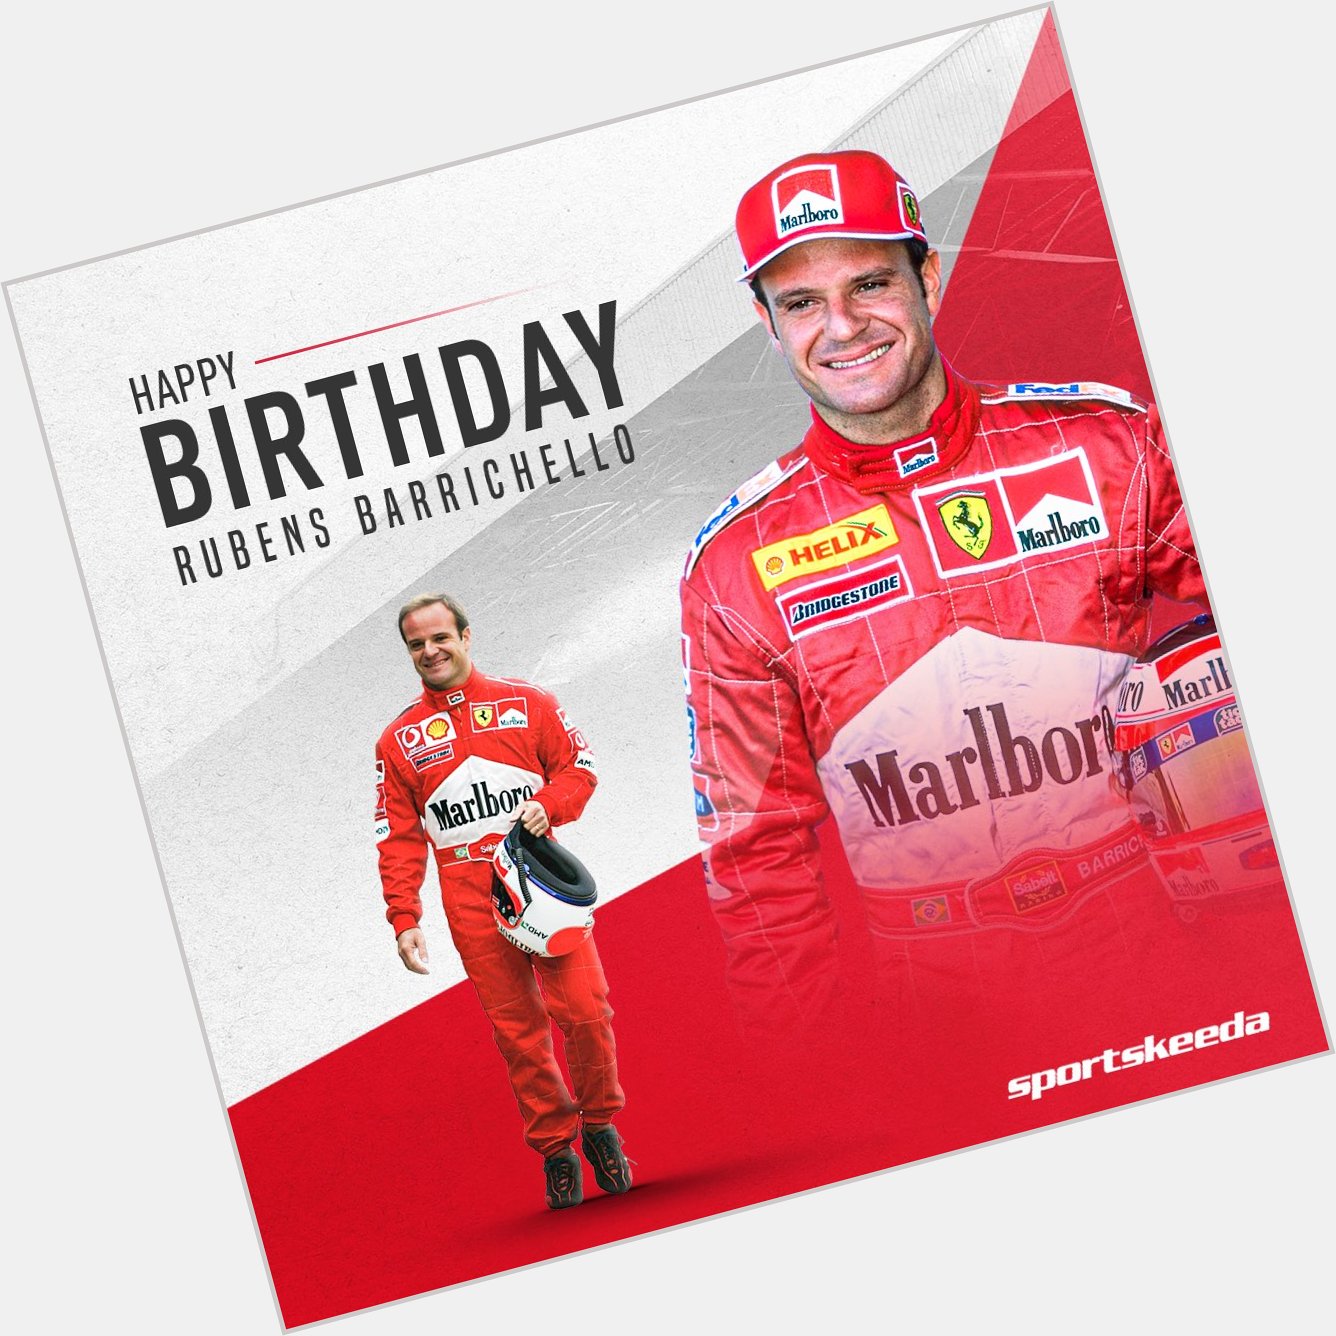 Rubens Barrichello turns 5  1  today, wishing him a happy birthday!   